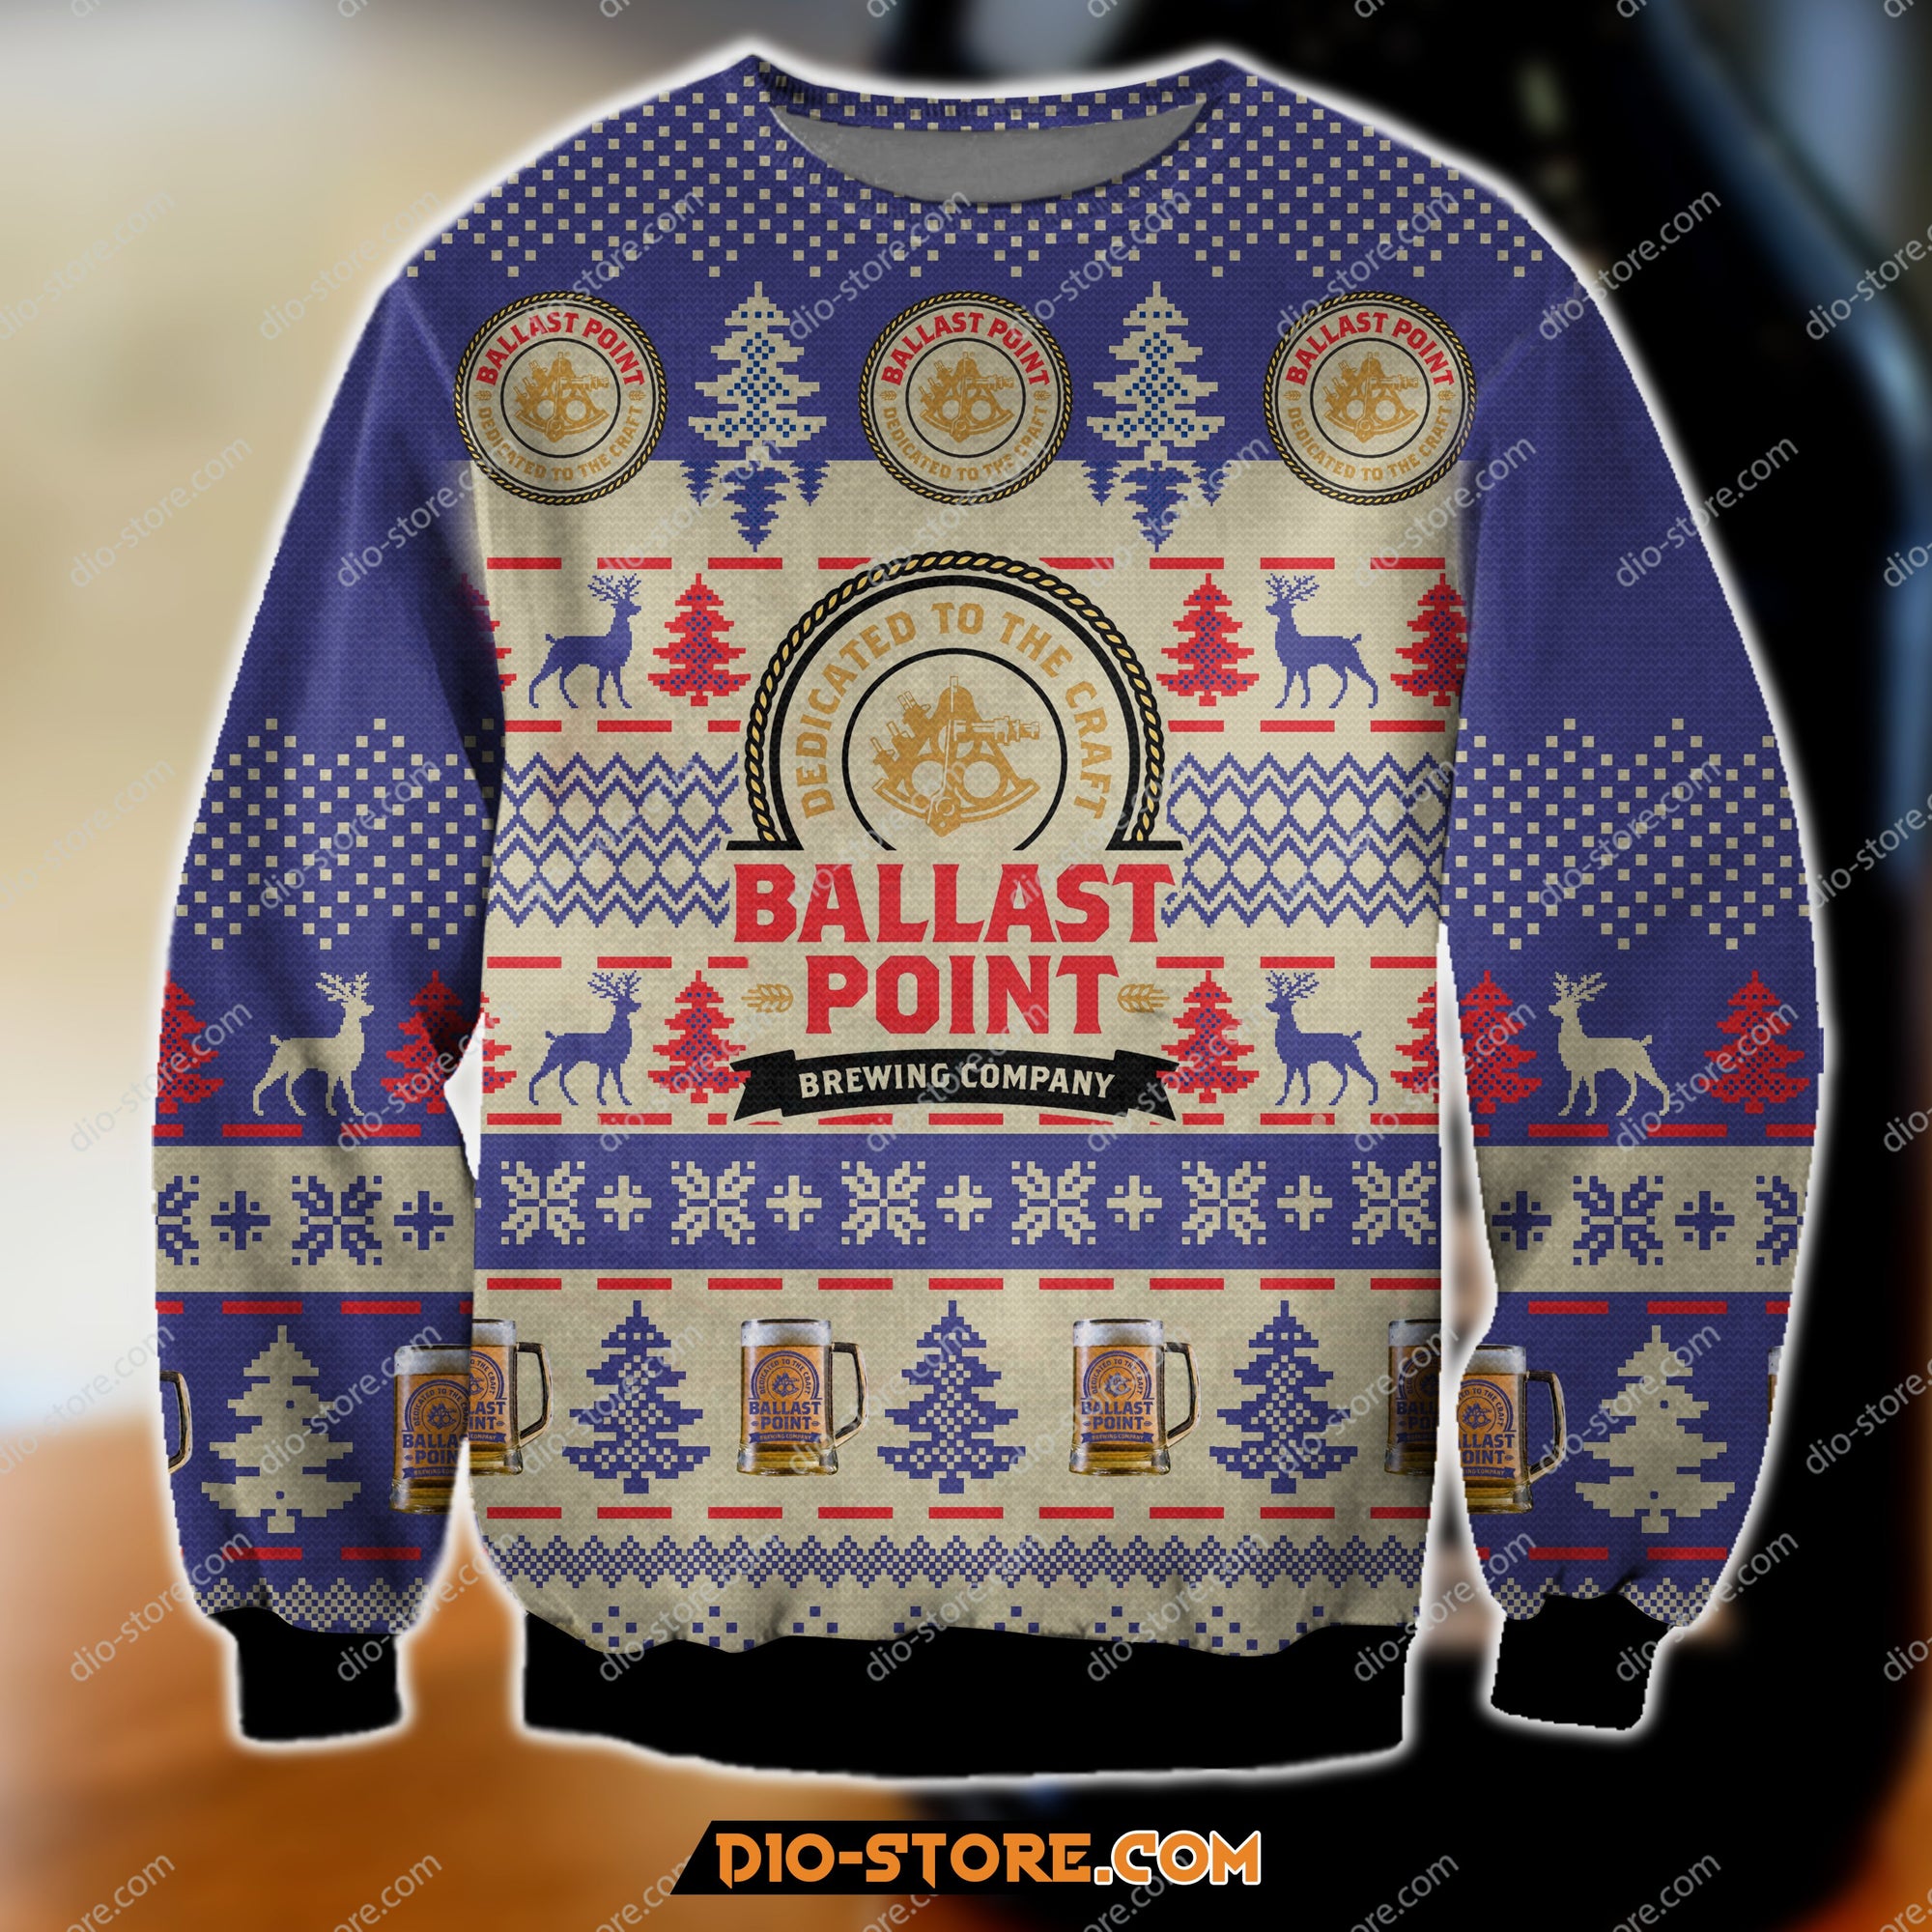 Ballast Point Beer Knitting Pattern 3D Print Ugly Sweatshirt Hoodie All Over Printed Cint10384